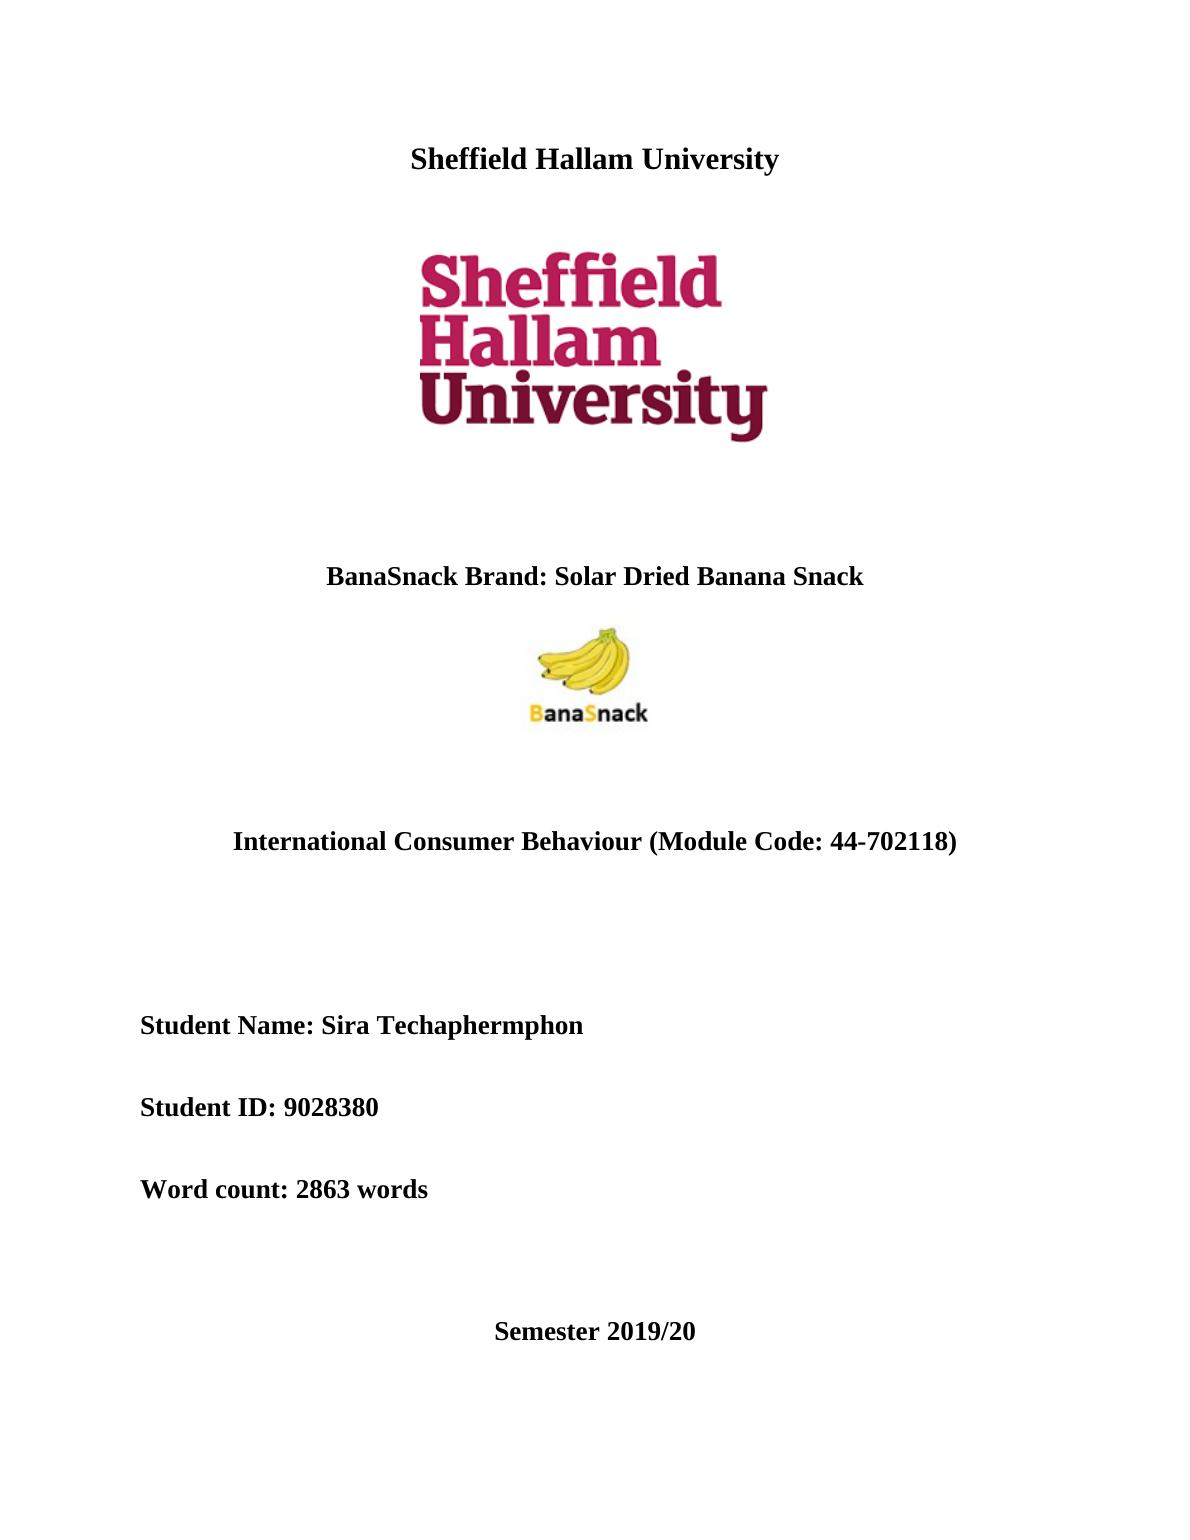 Sheffield Hallam University Assignment Report_1